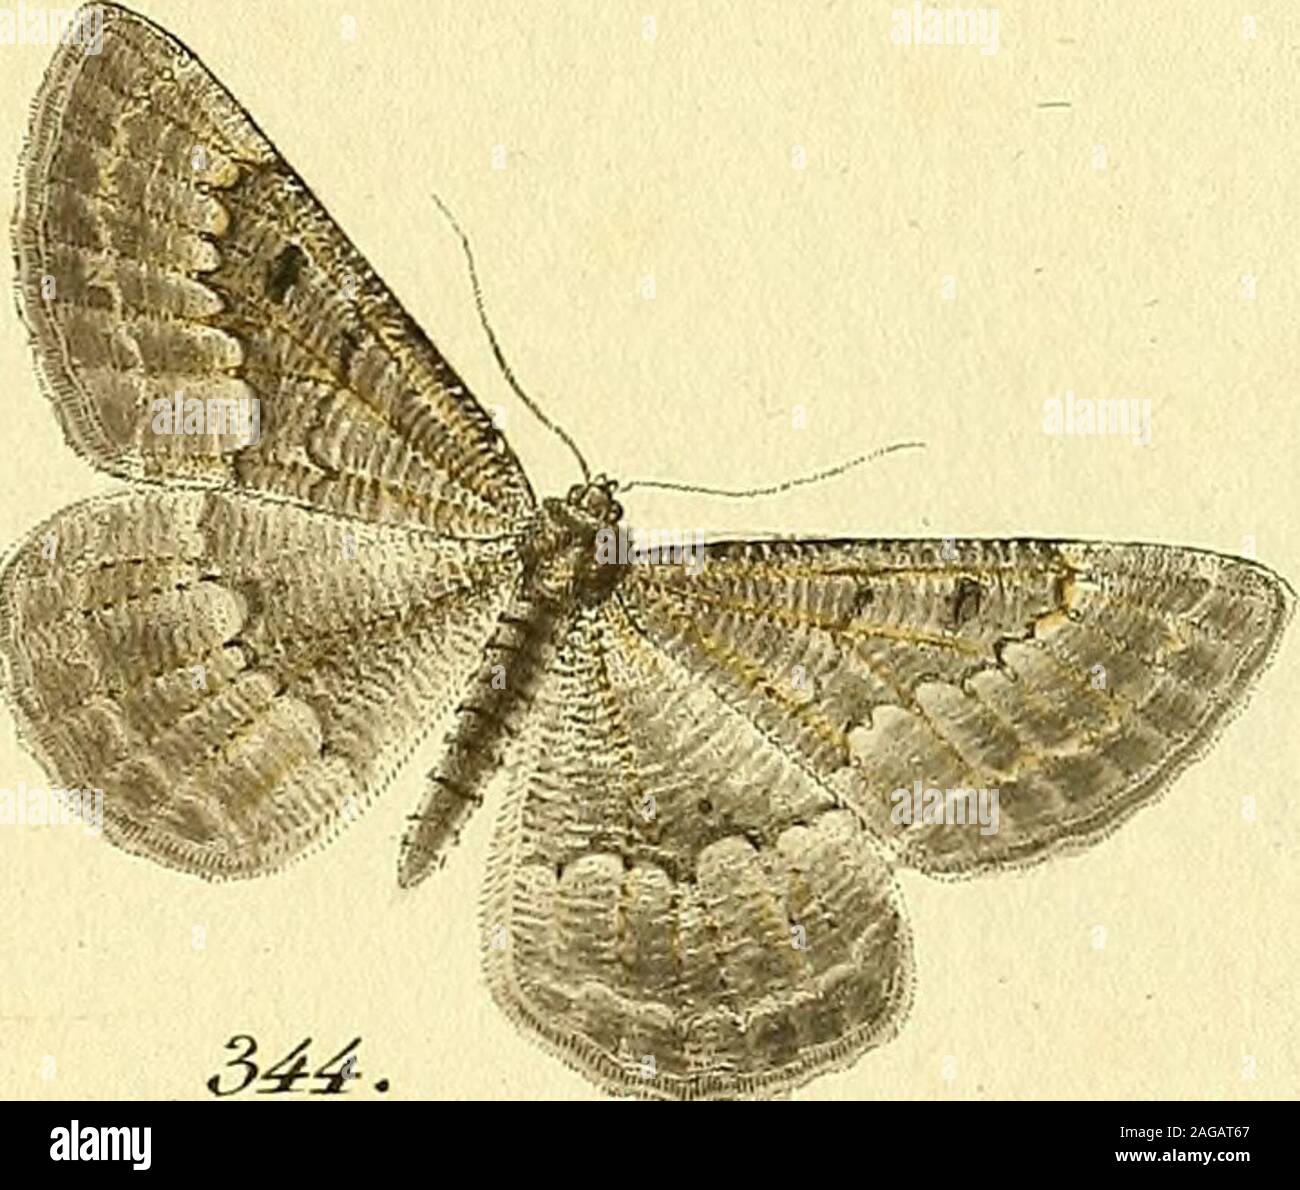 . Sammlung europscher Schmetterlinge, errichtet von Jacob Hner in Augsburg. 3do. ...JS&pt^oTf^srYi^^ V. (^eome^xe^^ -Z. c:--;^^^^^^;^«^^ (7, (^ M^i.. Stock Photo